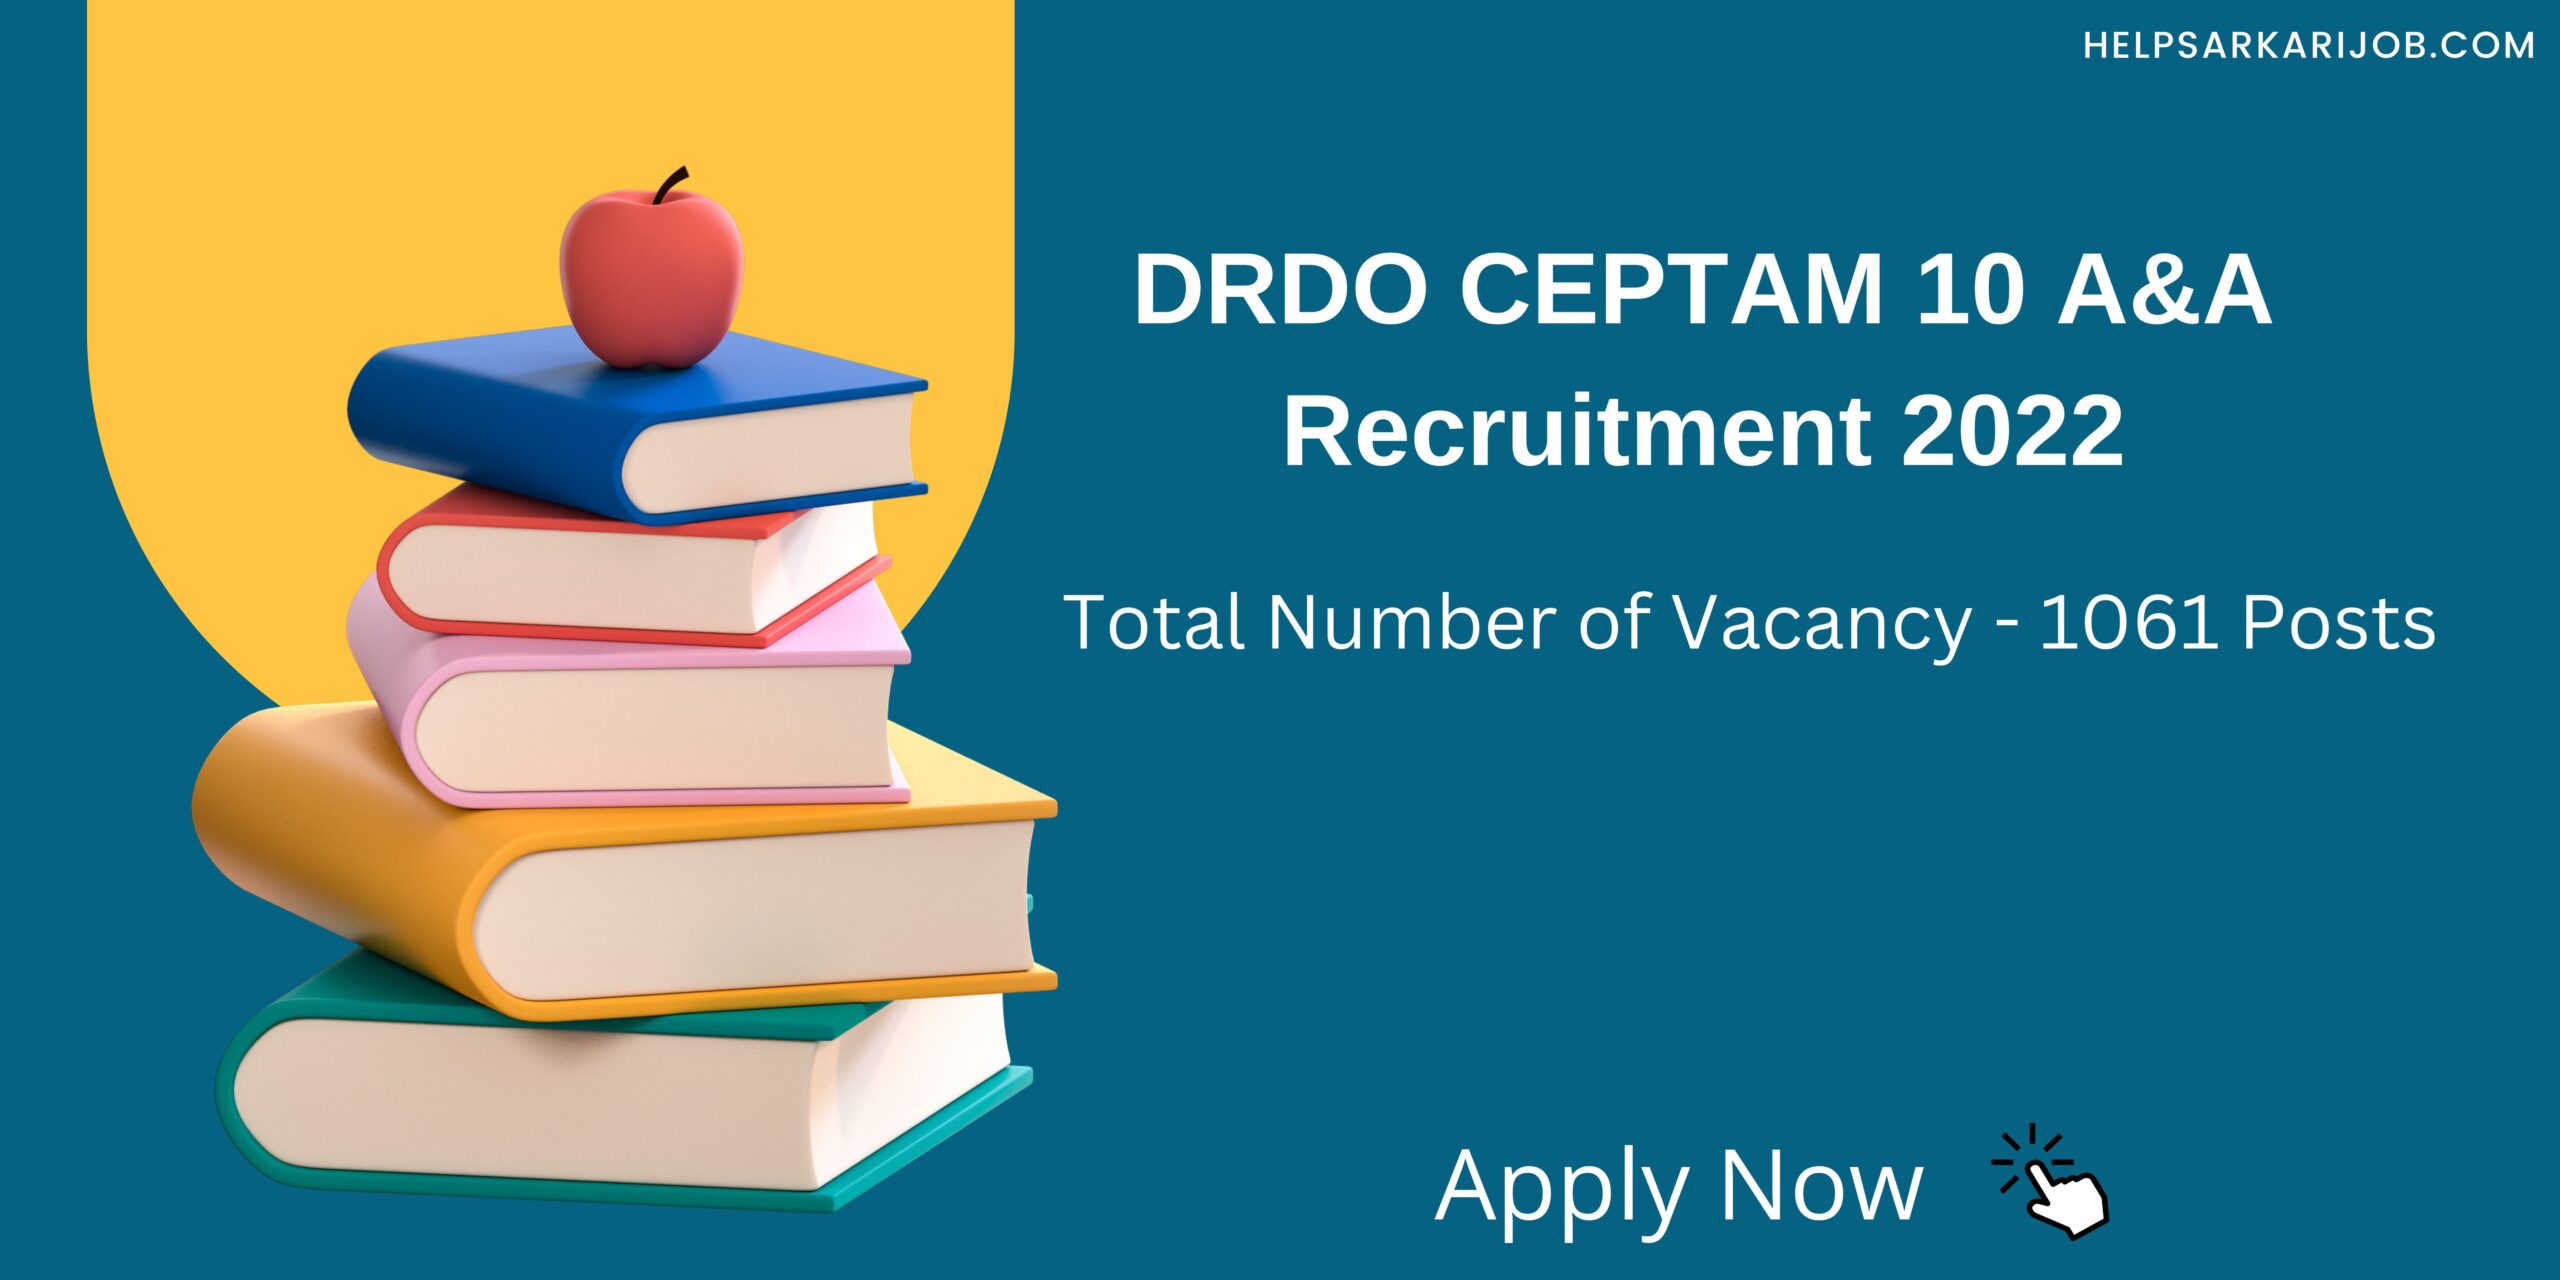 DRDO CEPTAM 10 aa Recruitment 2022